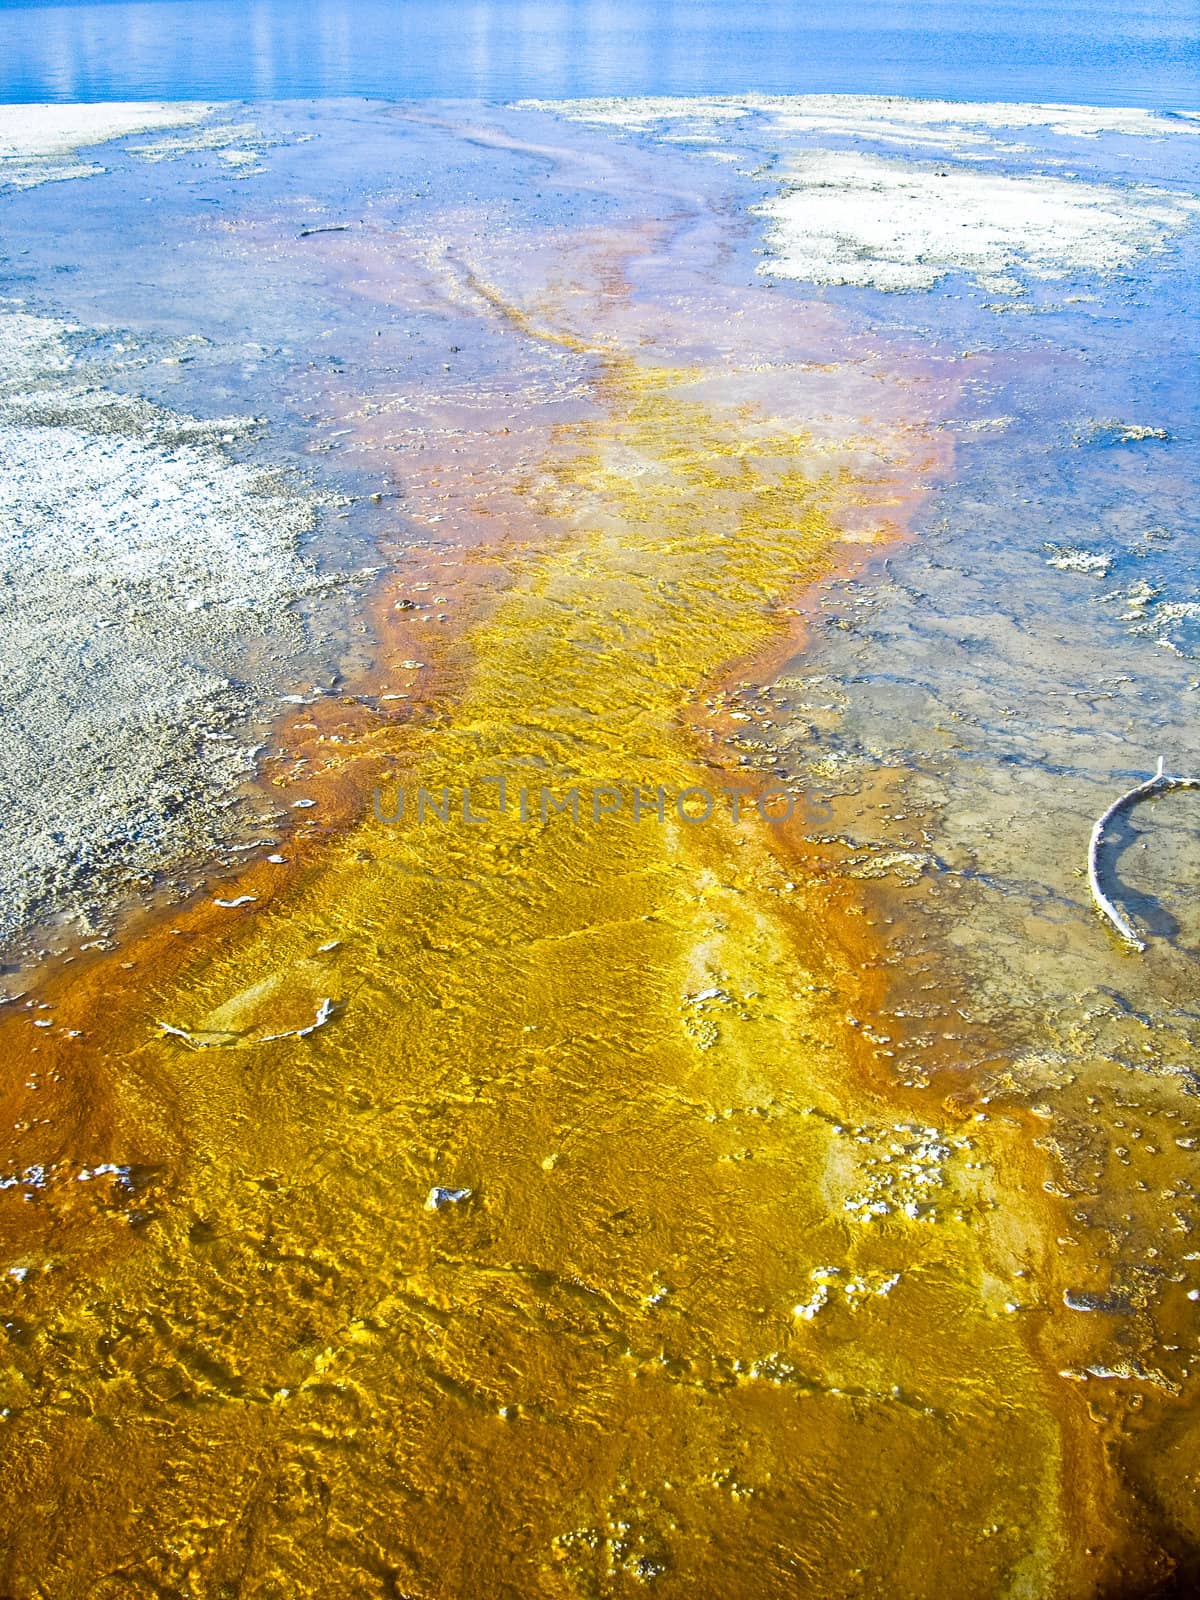 Algae creates color in Yellowstone's geothermal streams